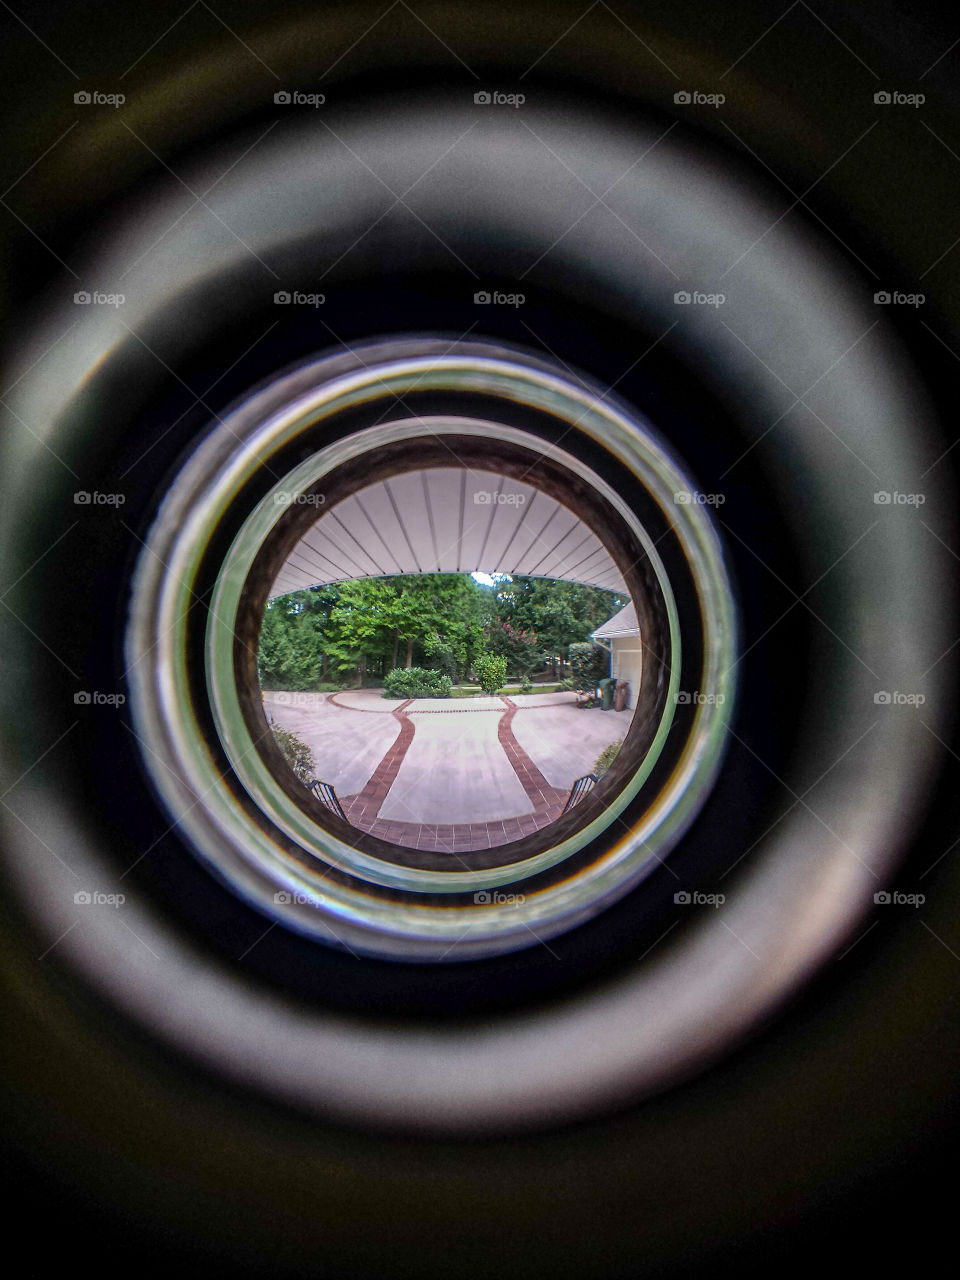 View through the peephole in my front door. 